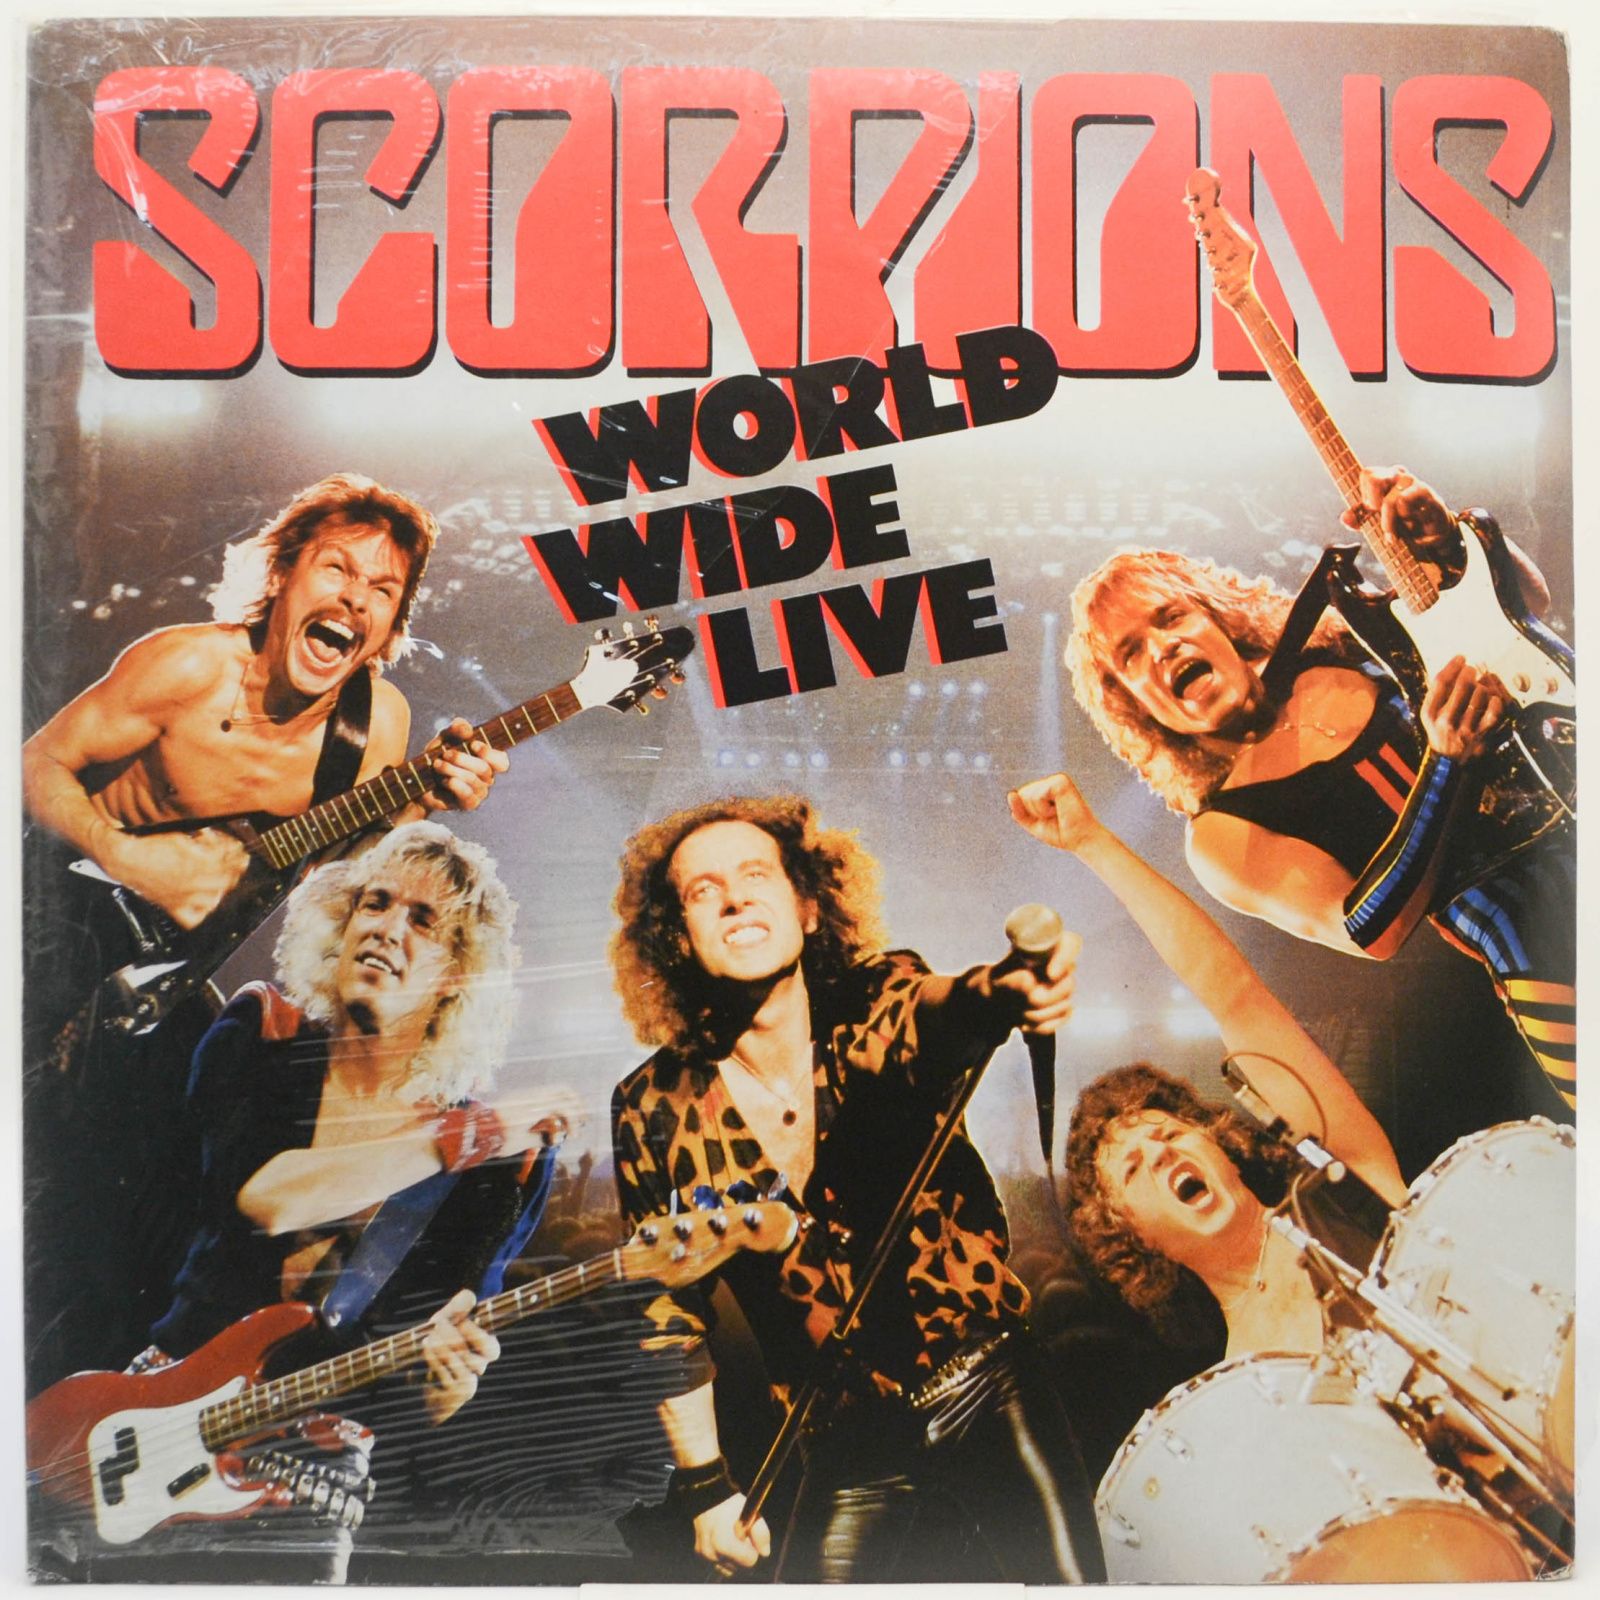 Scorpions — World Wide Live (2LP), 1985